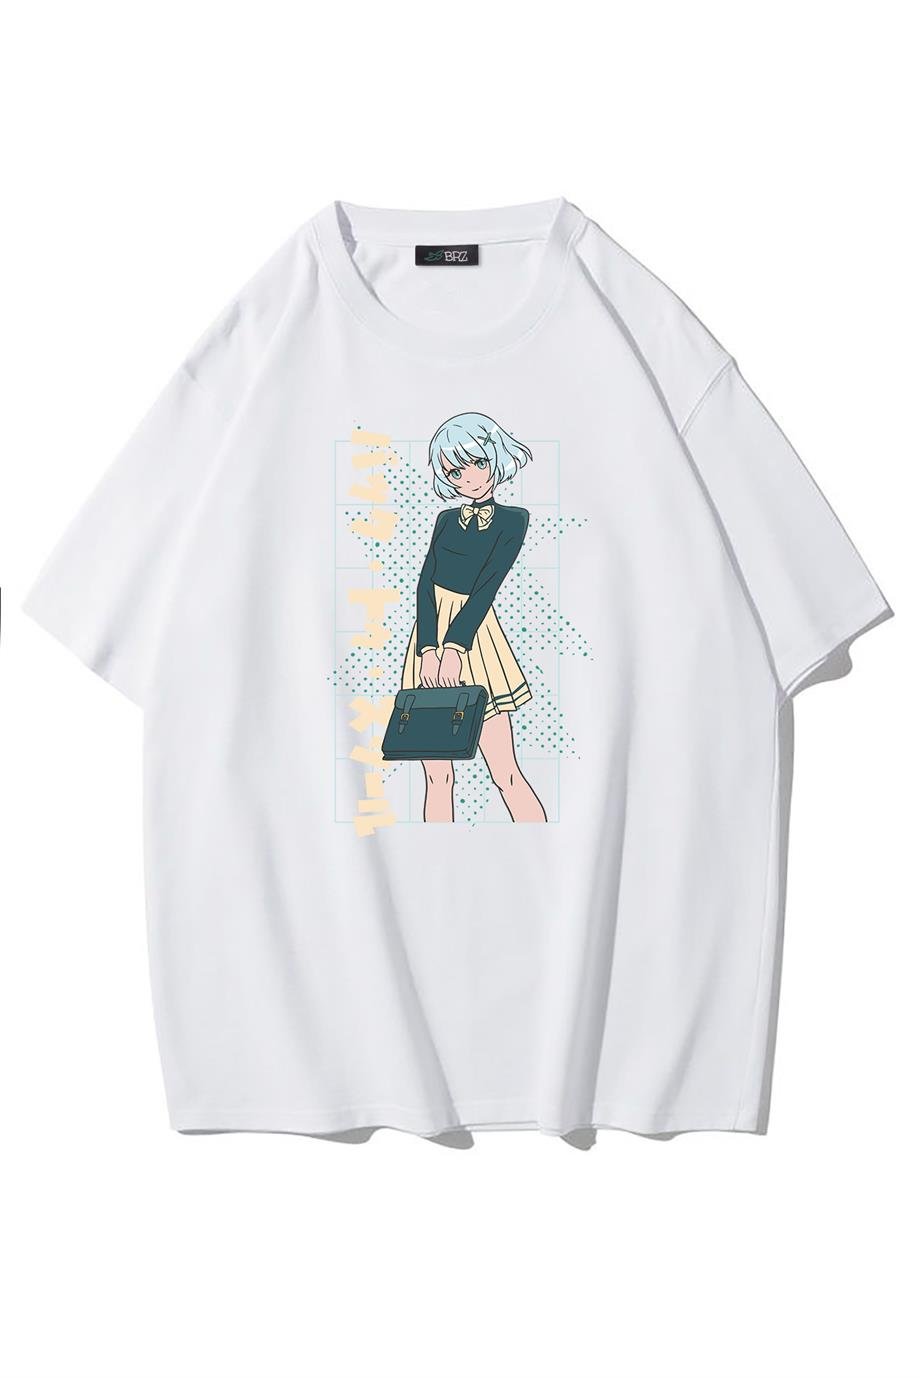 BRZ Collection Unisex Oversize Anime School Girl T-shirt